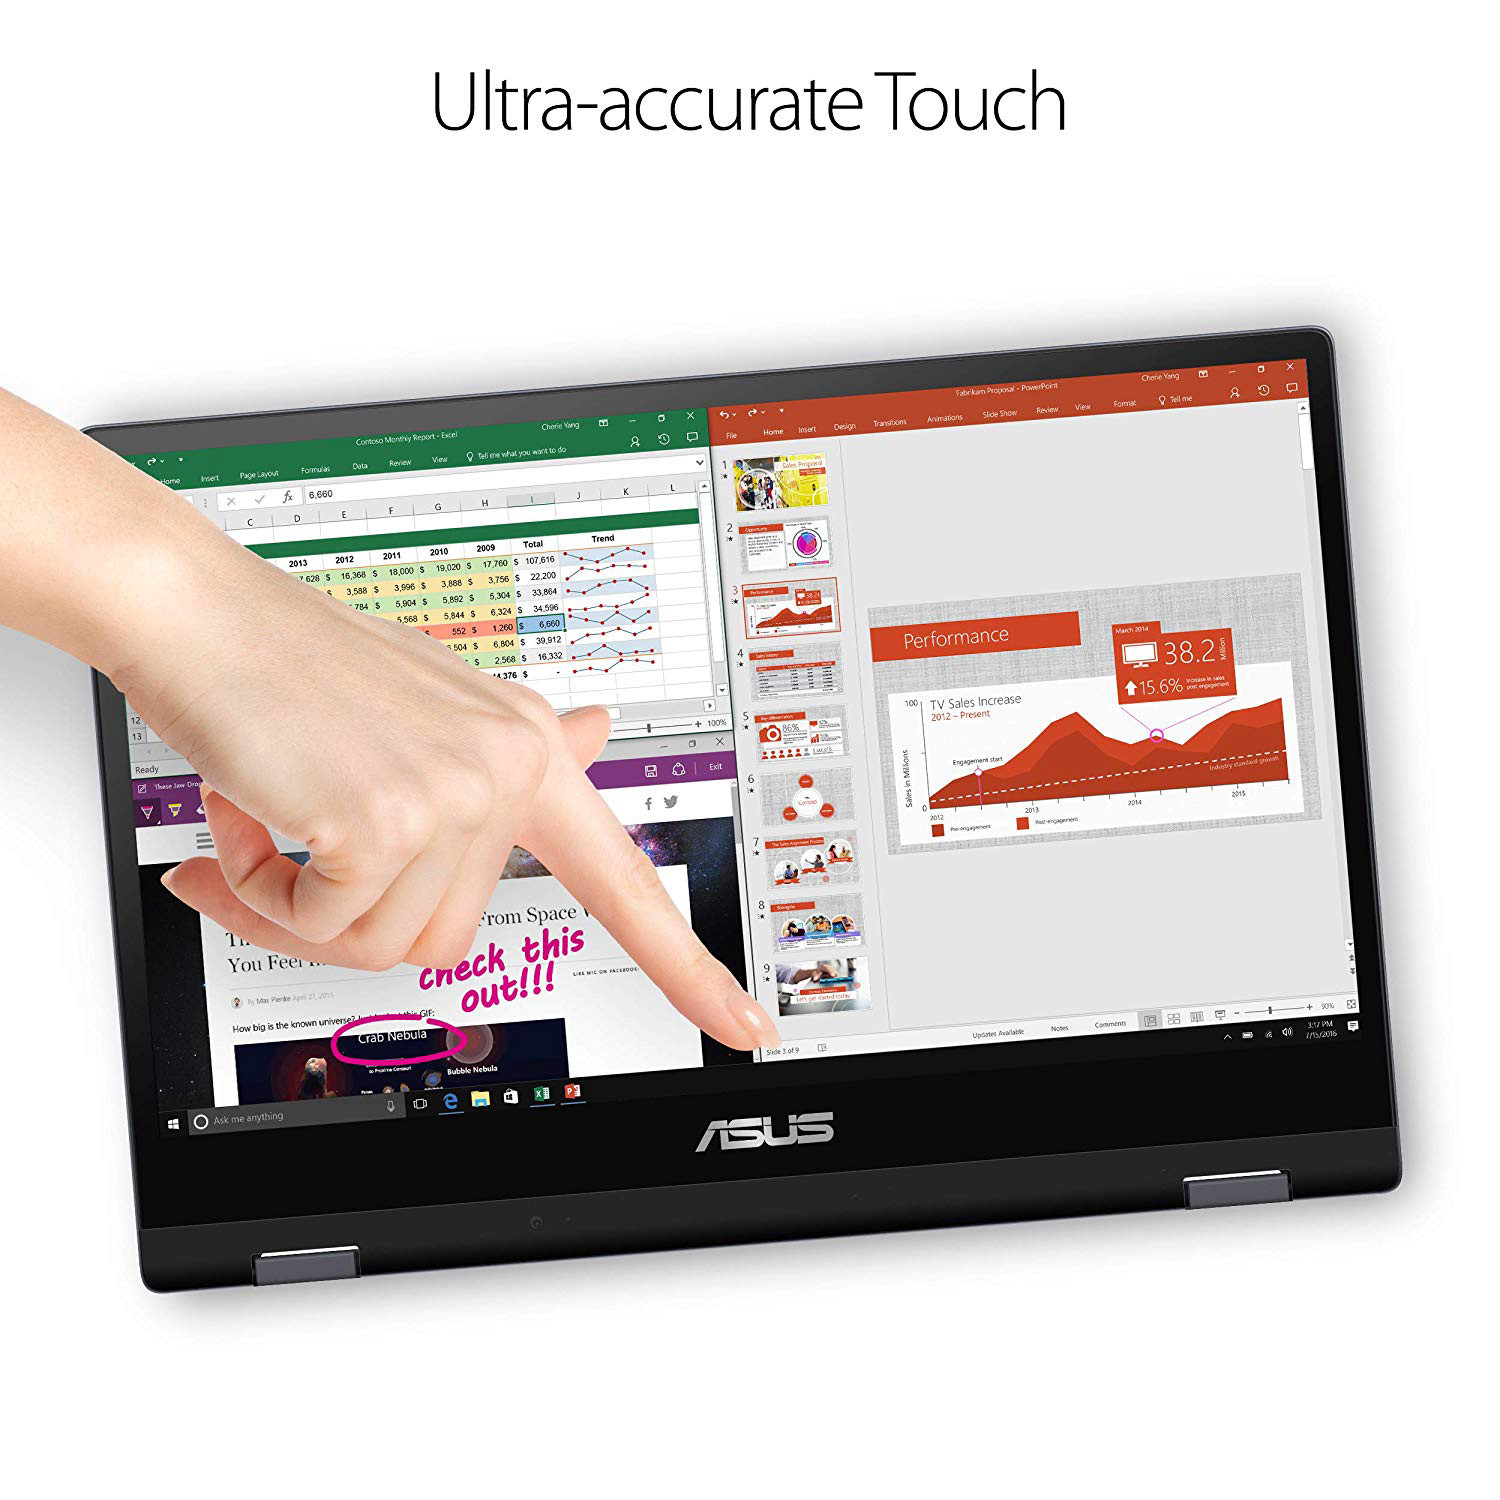 ASUS VivoBook Flip 14 TP412UA-DB71T 14” Thin and Lightweight 2-in-1 Full HD Touchscreen Laptop, Intel Core i7-8550U 4.0GHz Processor, 8GB DDR4 RAM, 256GB SSD, Windows 10 Home, Fingerprint Reader